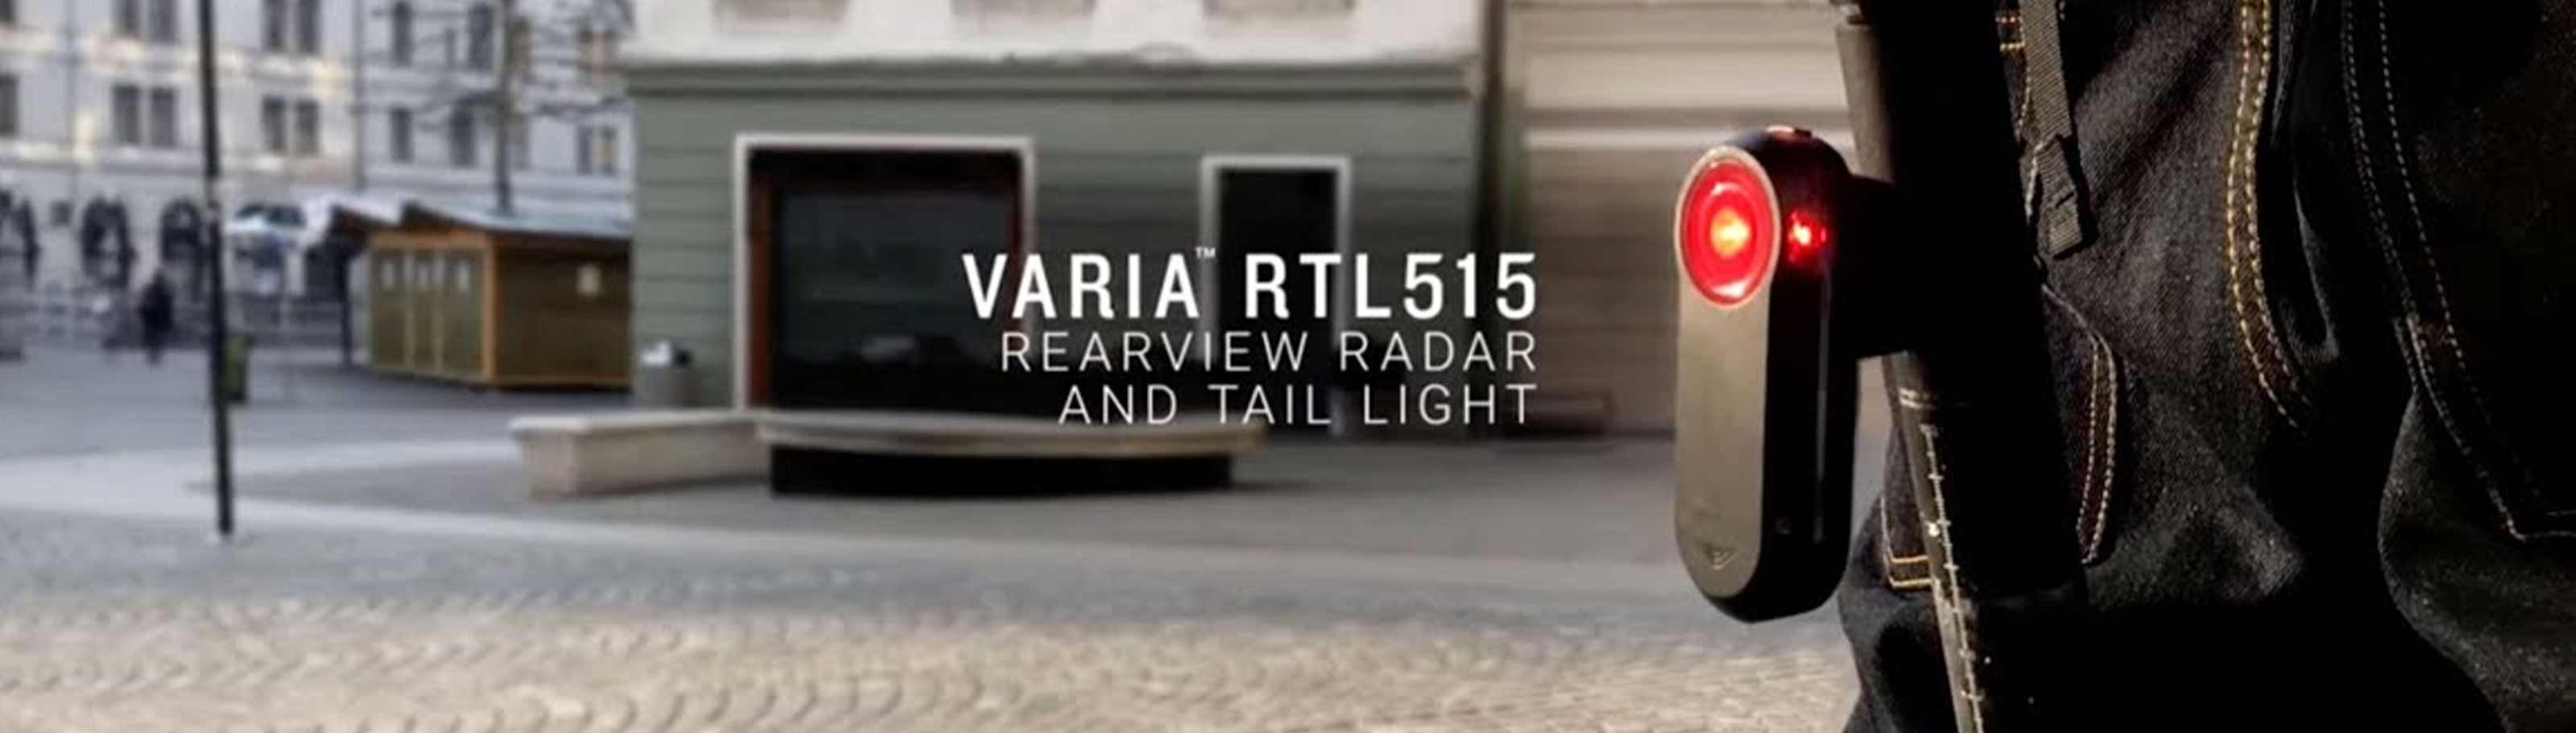 Garmin Varia™ RTL515  Bike Radar and Tail Light